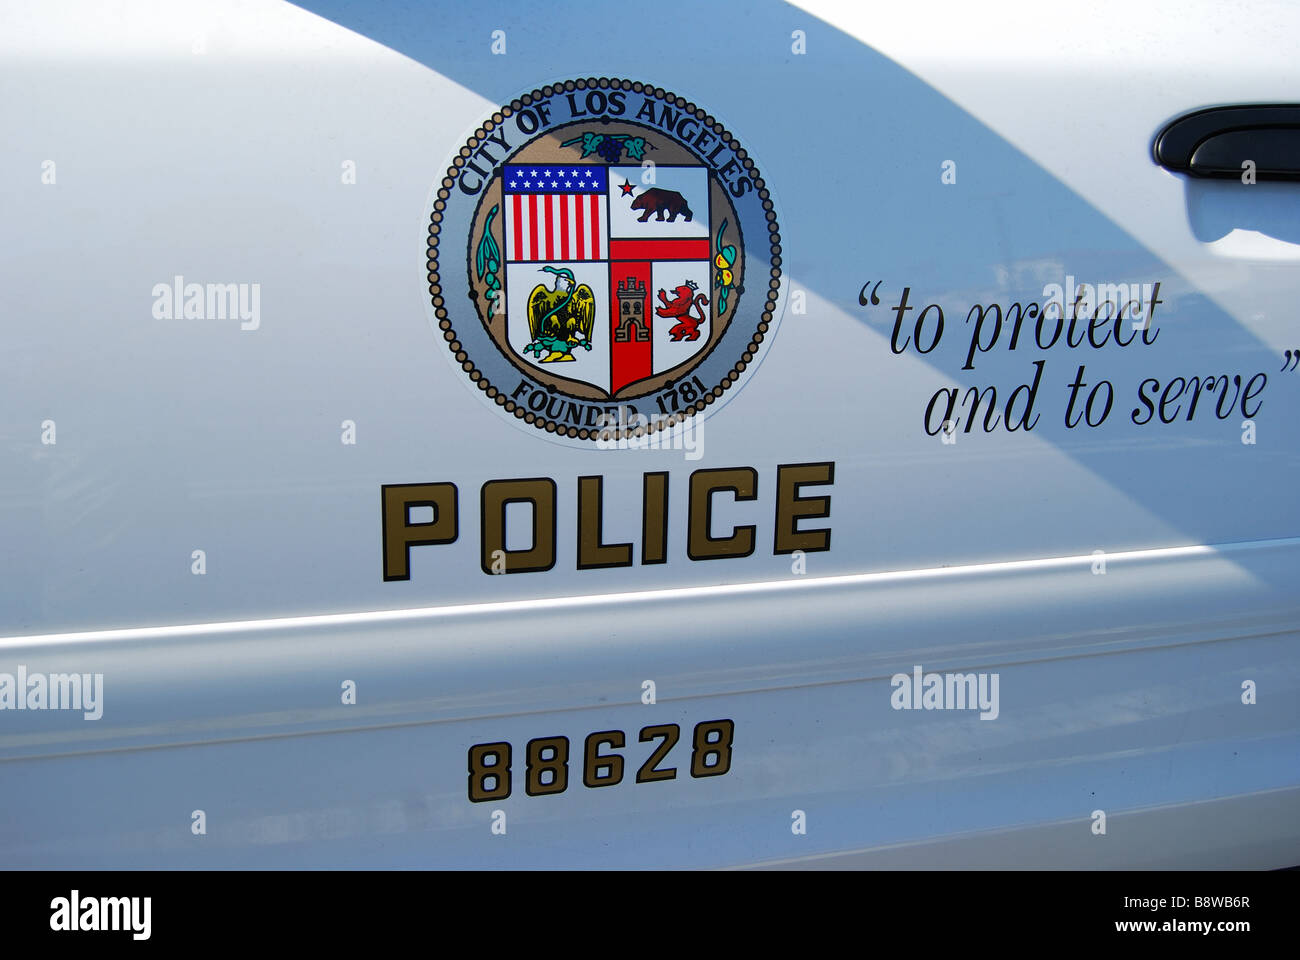 Los Angeles Police Department car, Marina del Rey, Los Angeles, California, United States of America Stock Photo